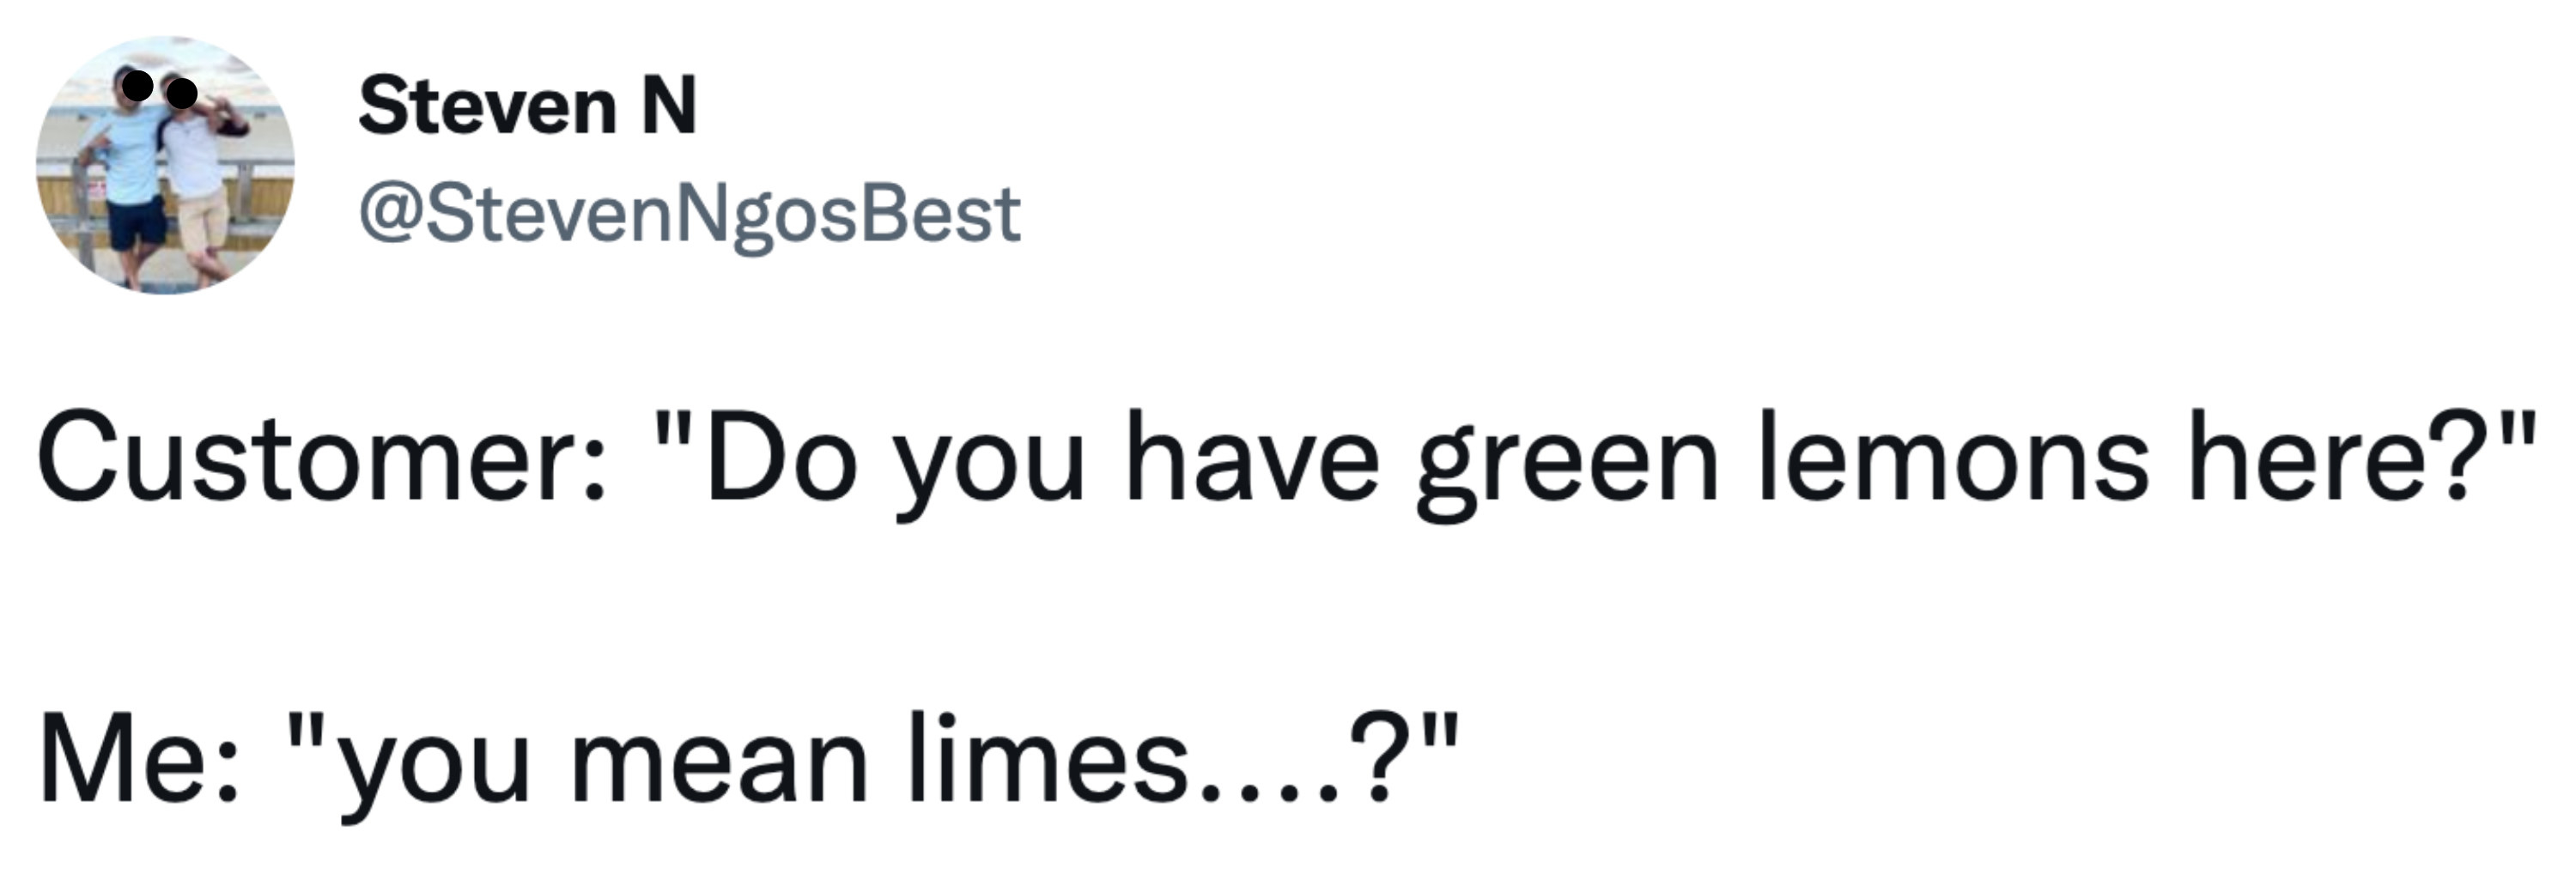 person calling limes green lemons